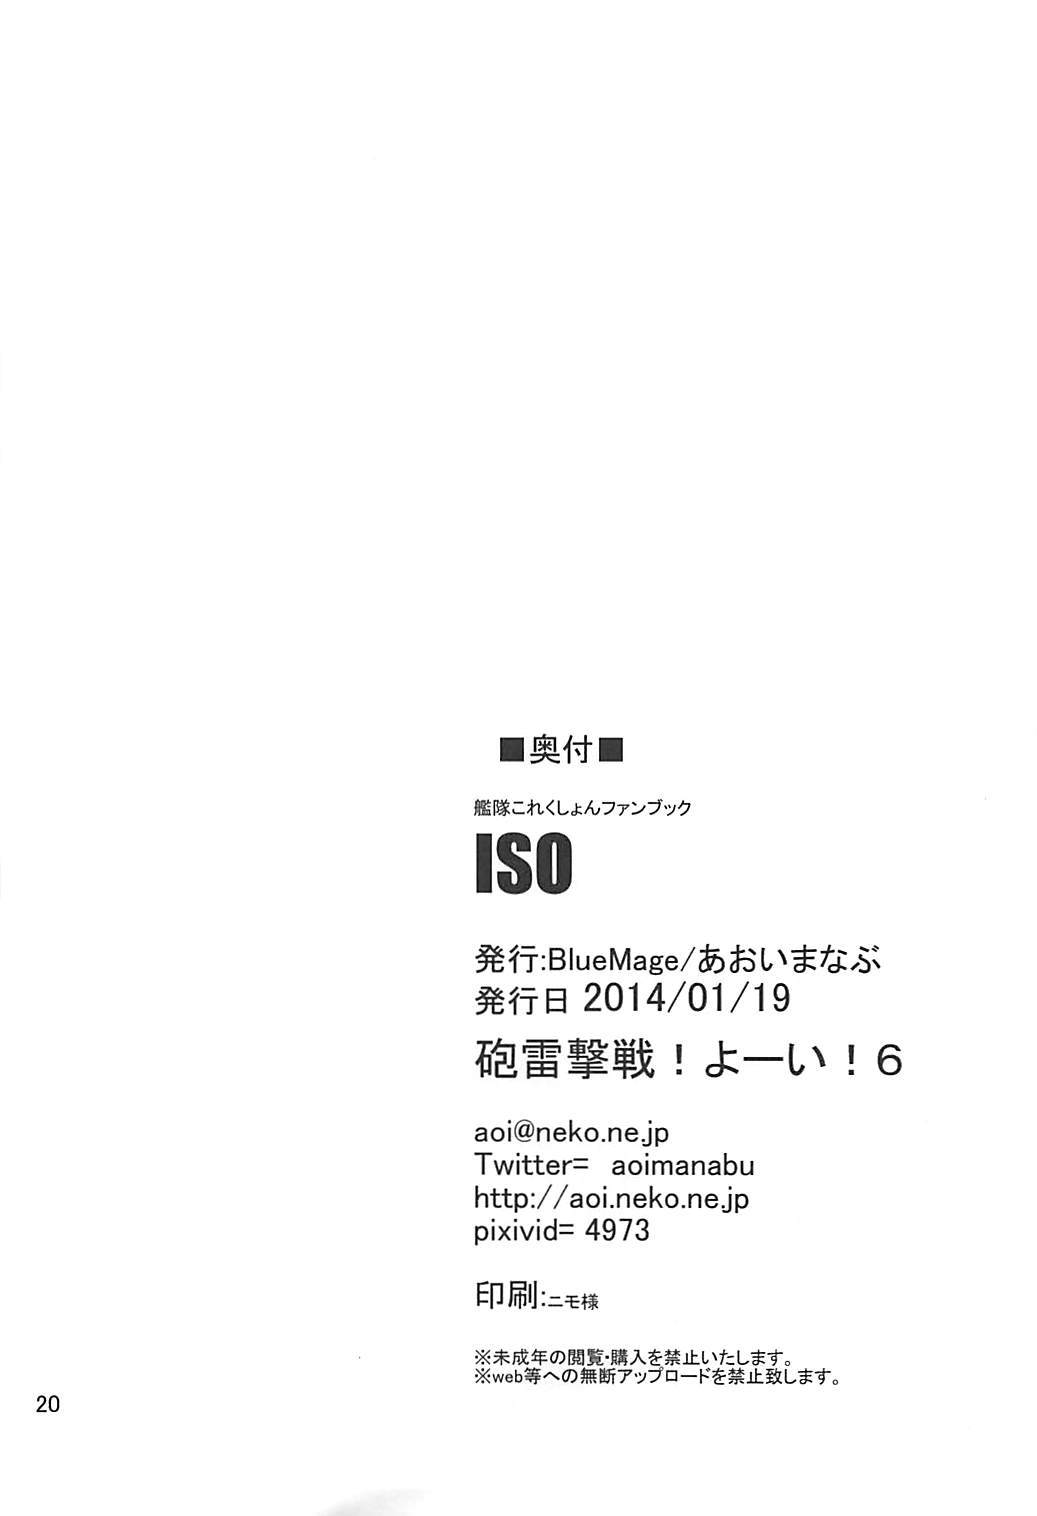 ISO-Ironbottom Sound Oppai